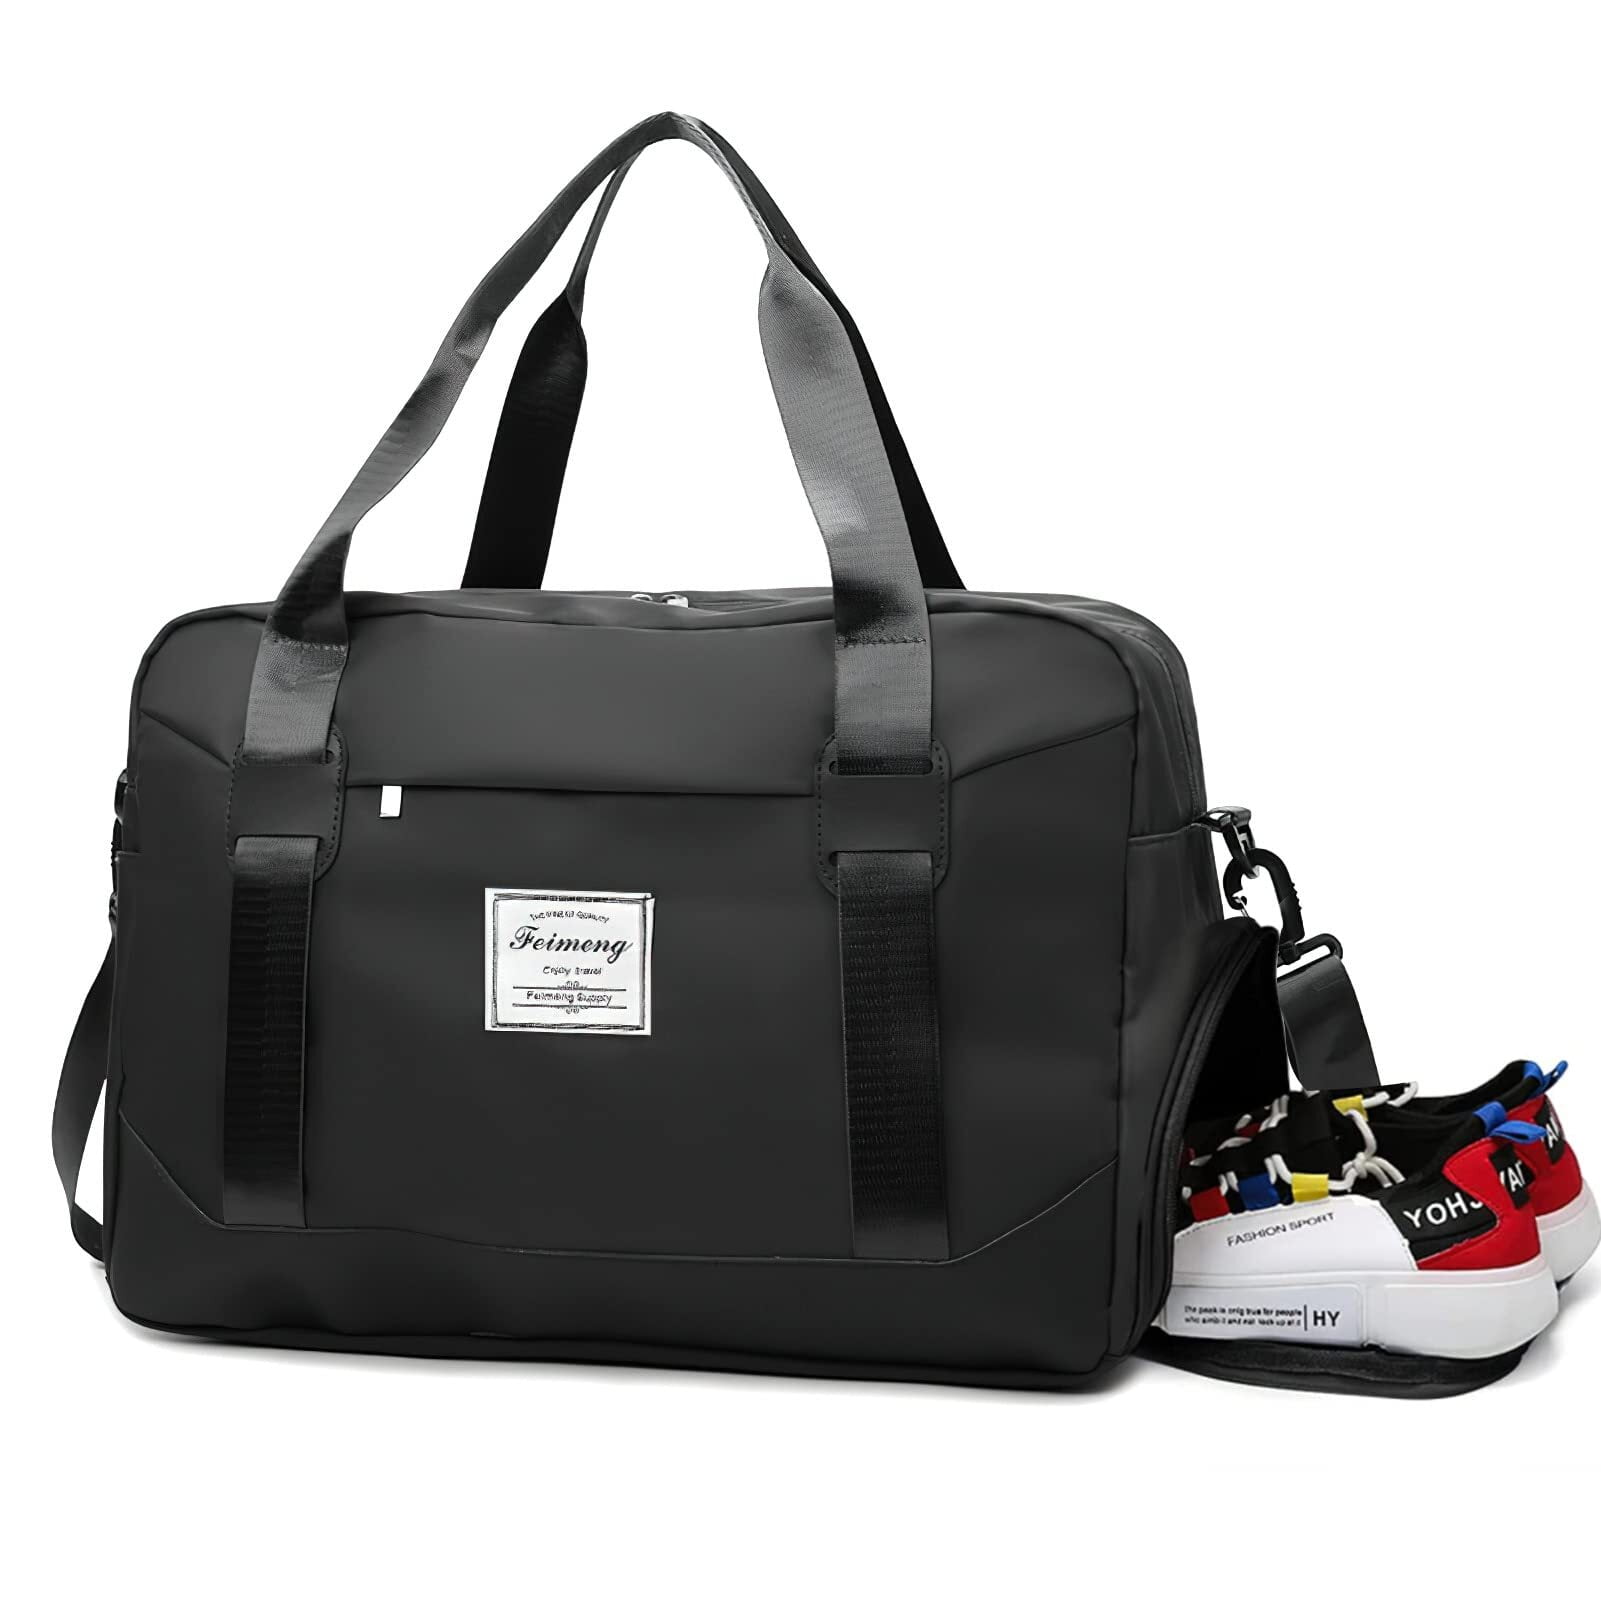 Achort Travel Duffel Bag, Large Folding Sports Gym Bag with Wet Pocket ...